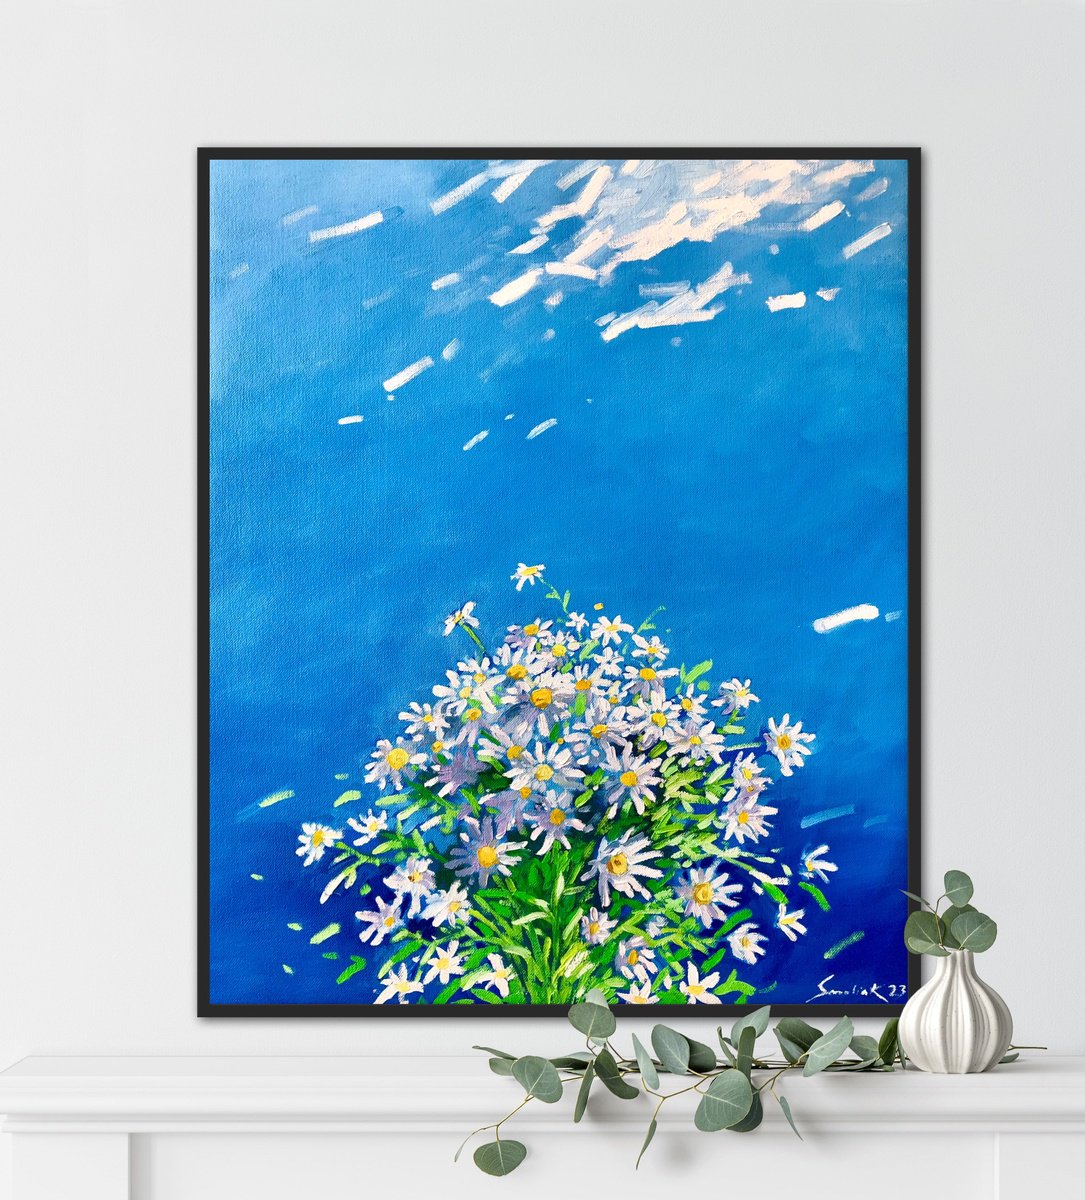 Blue sky with white flowers by Volodymyr Smoliak